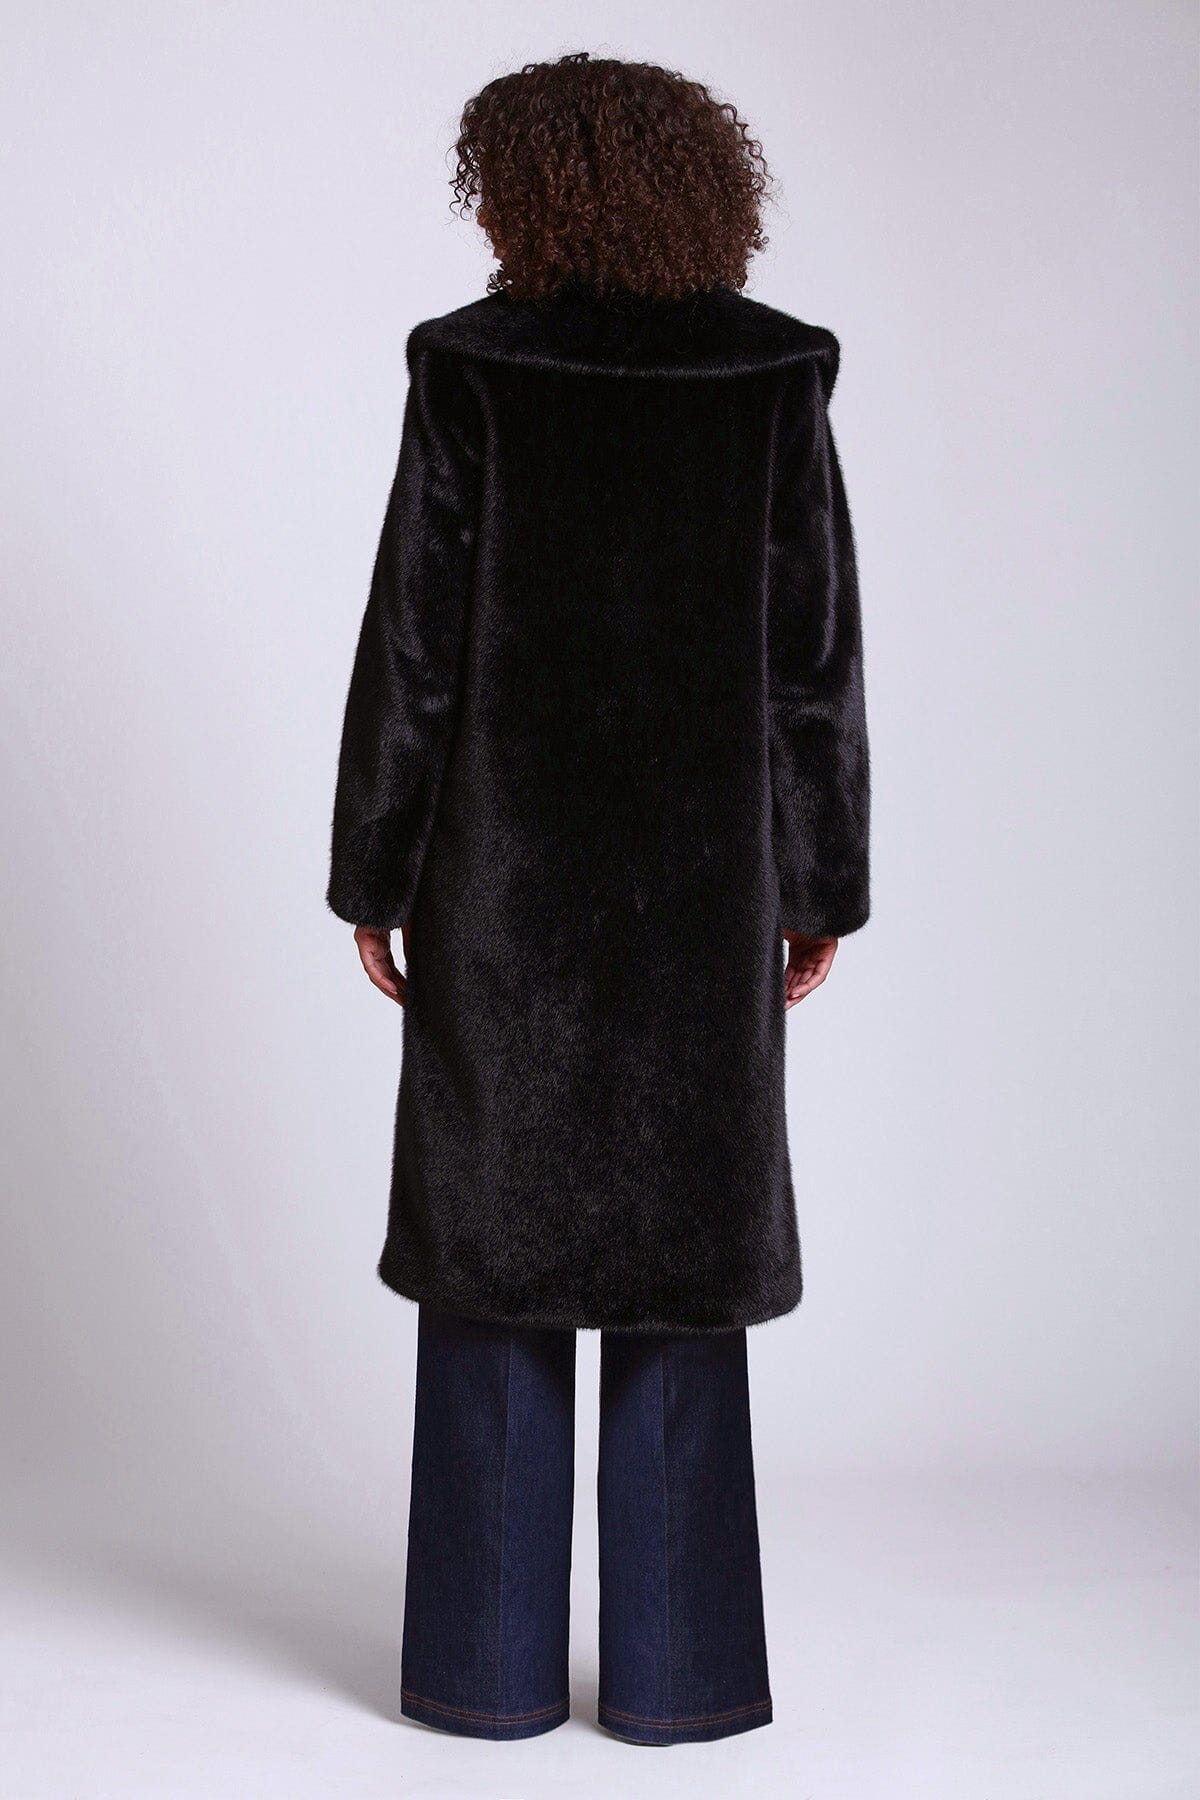 Black shawl collar faux fur long coat jacket - figure flattering glamorous outerwear for women